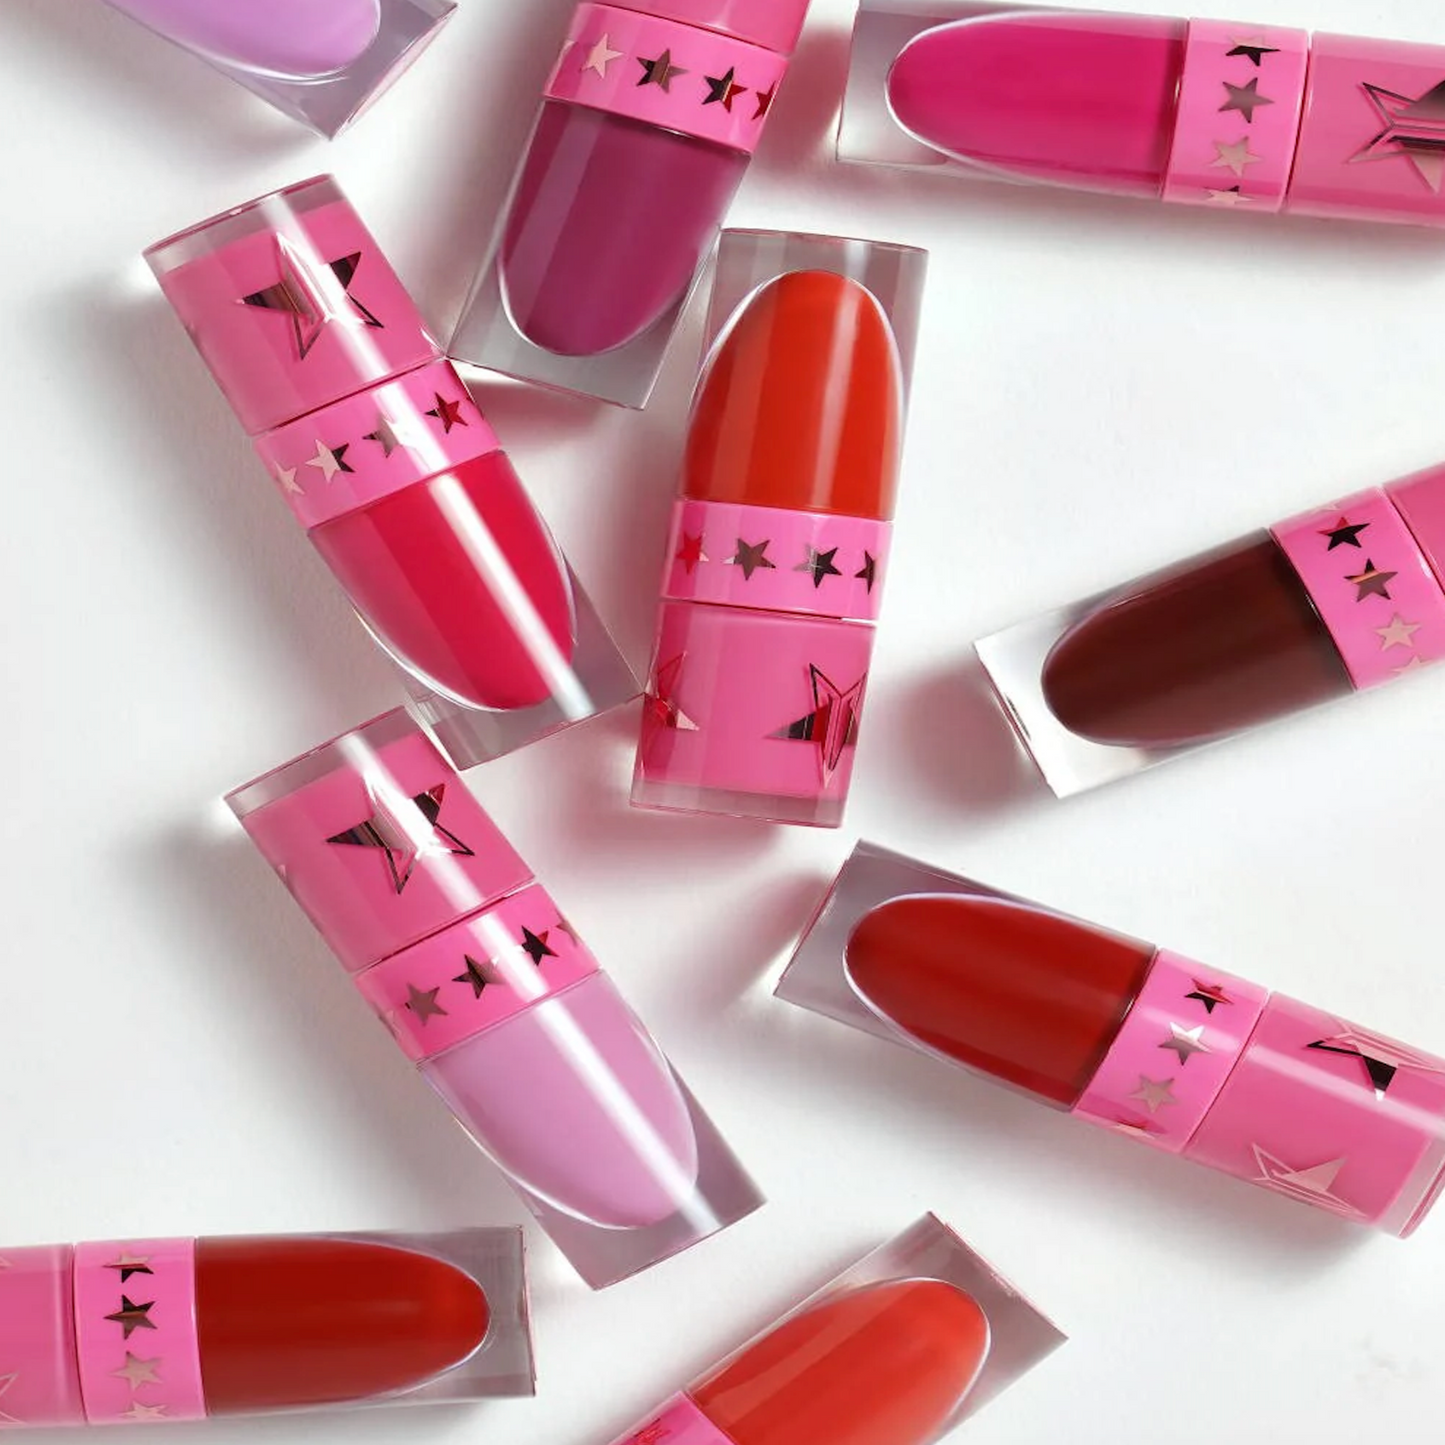 Jeffree Star Cosmetics Limited Edition Blood Sugar Liquid Lipstick Vault